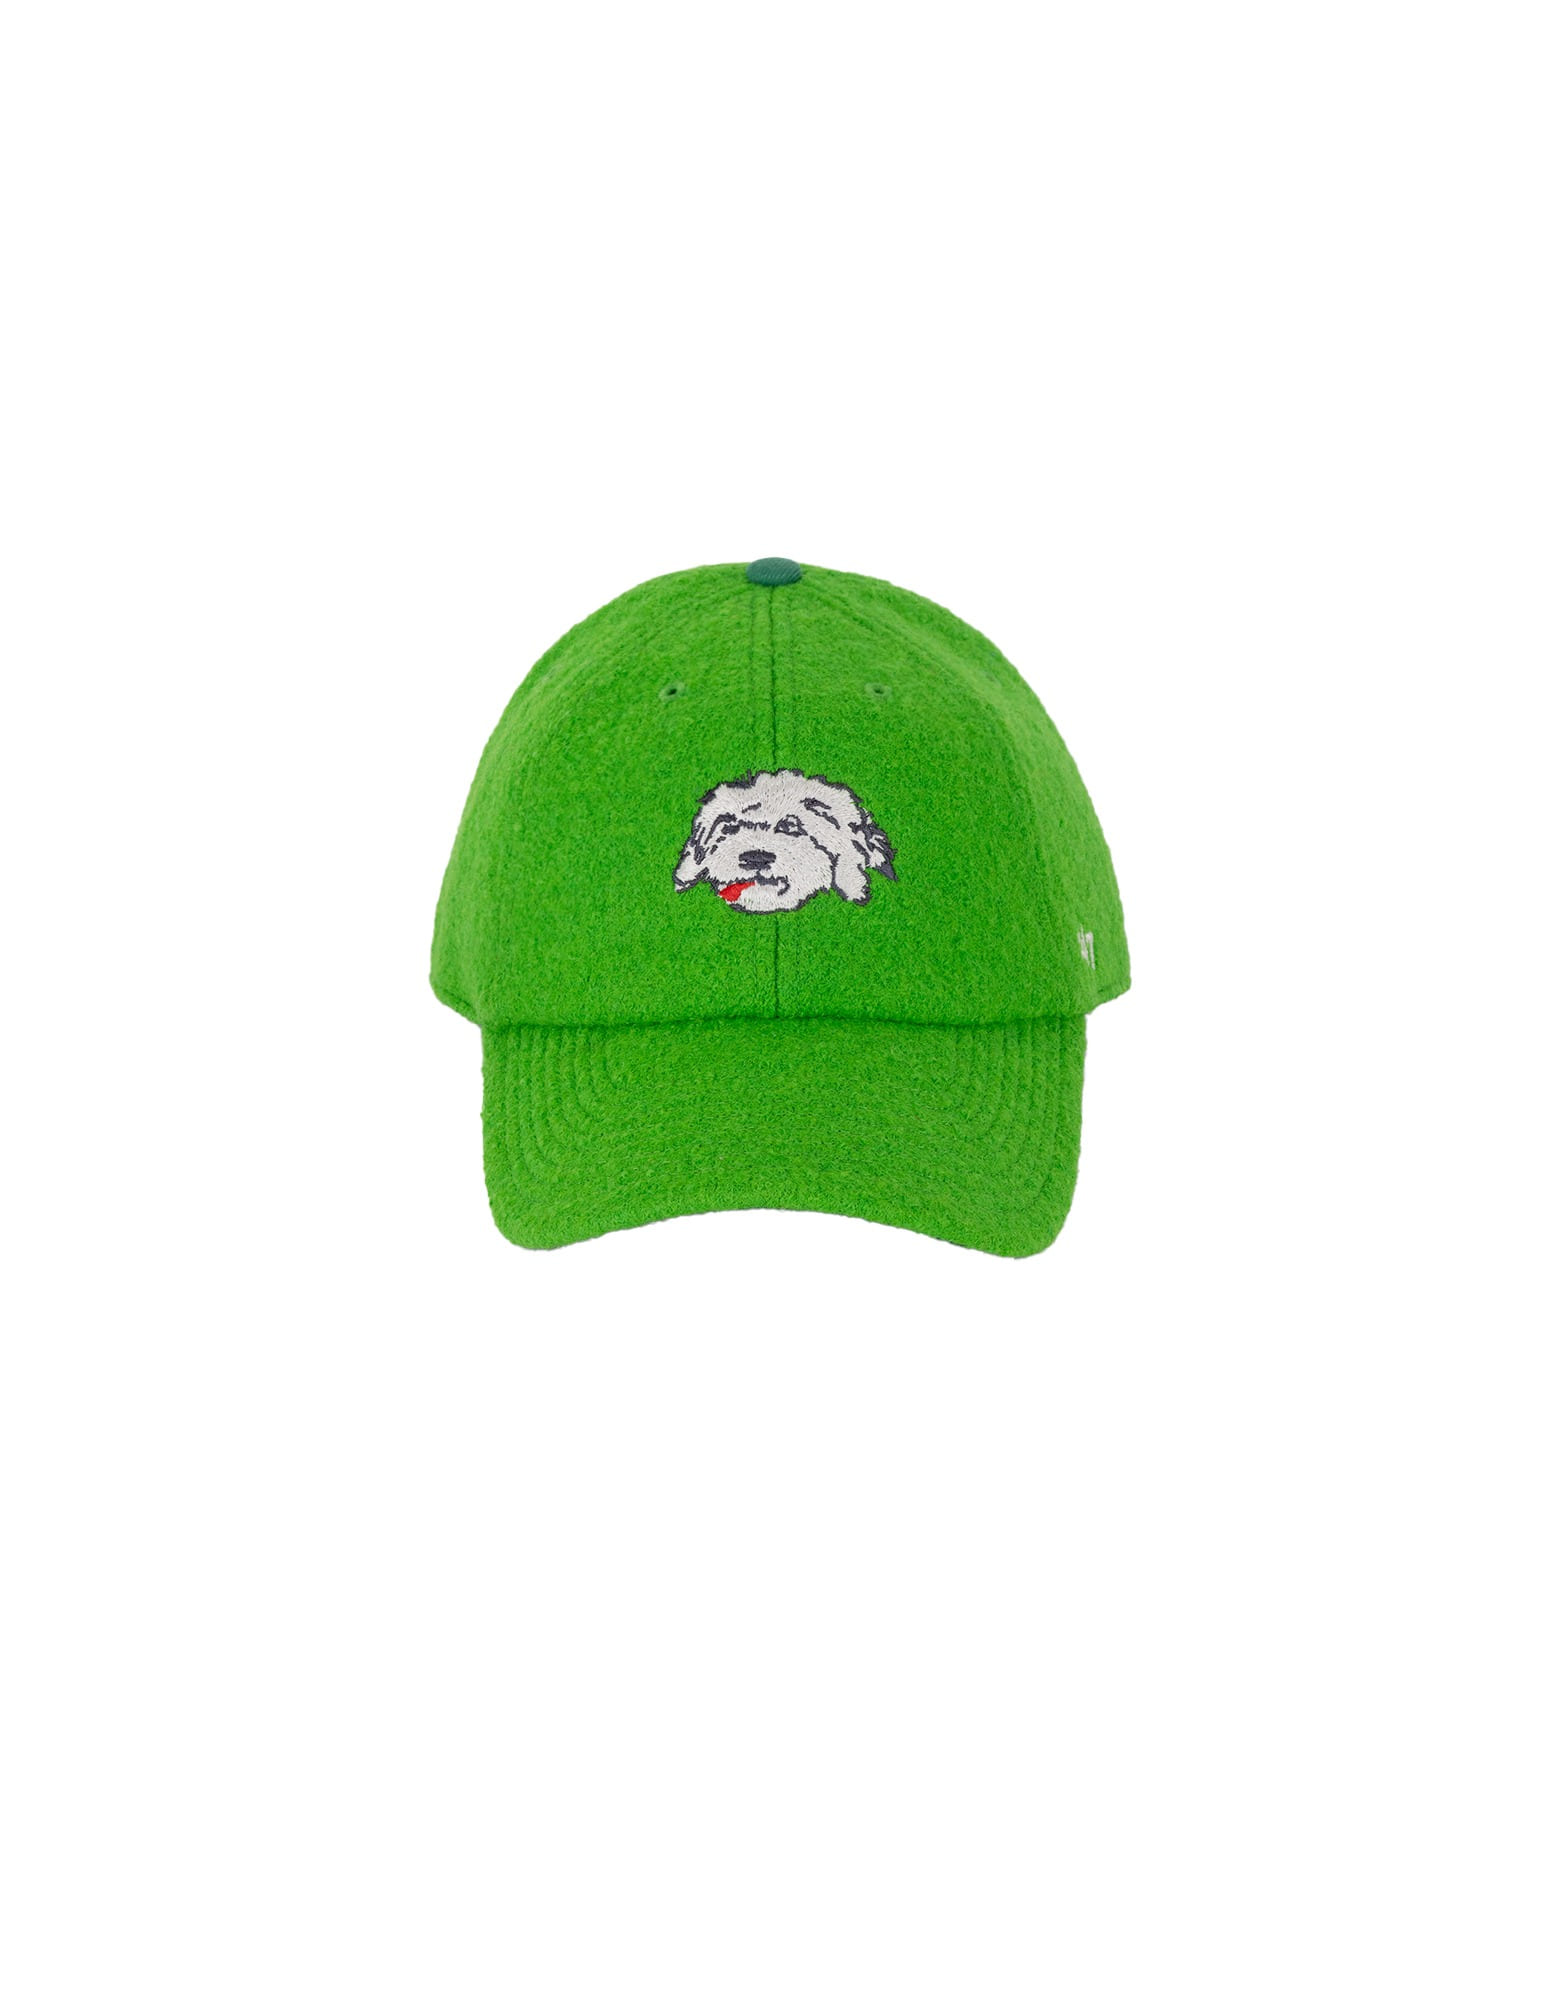 Shaggy Dog Baseball Cap (Bright Green)